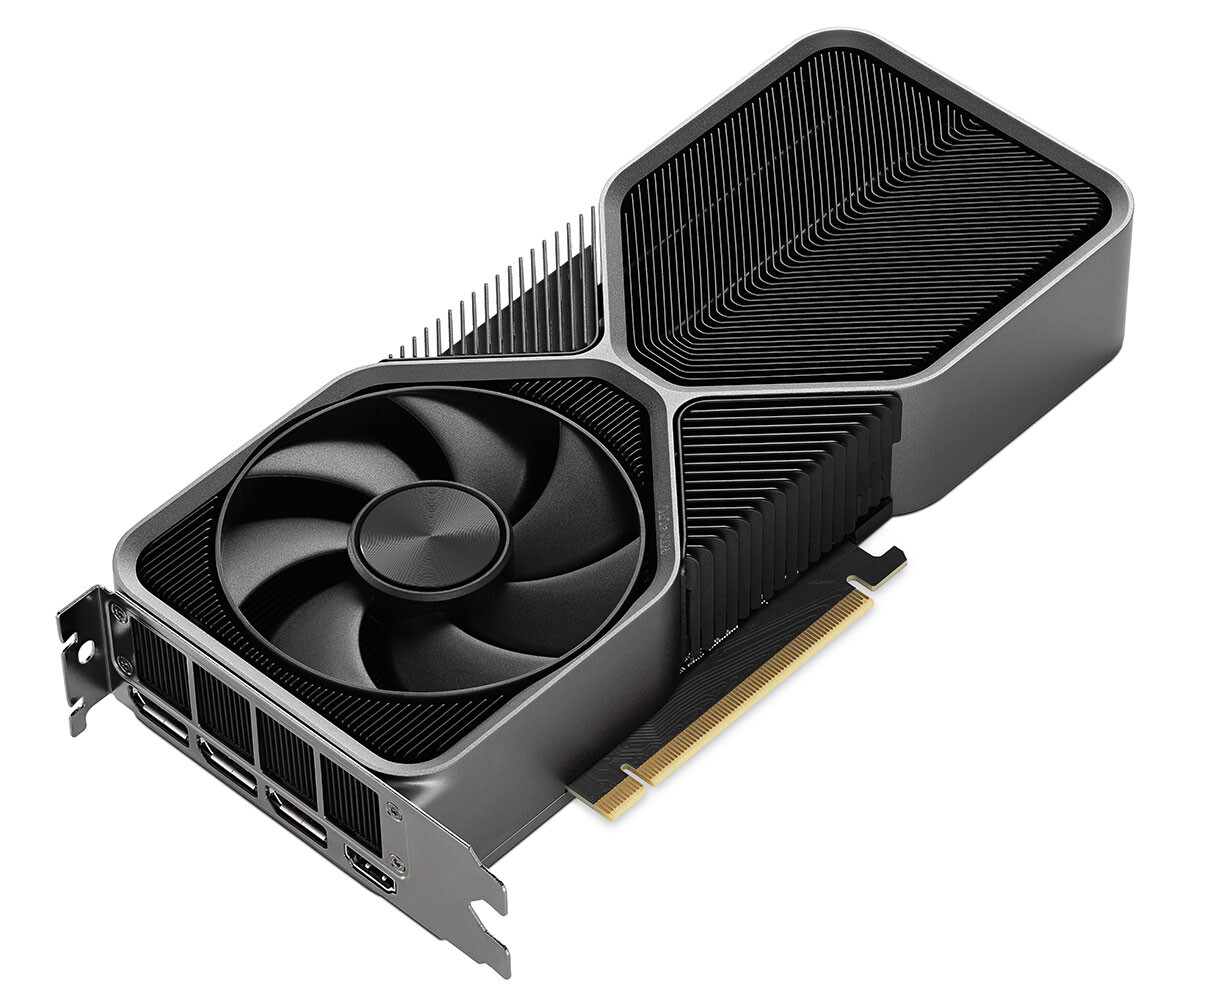 Nvidia GeForce RTX 4080 Ti GPU release could be imminent